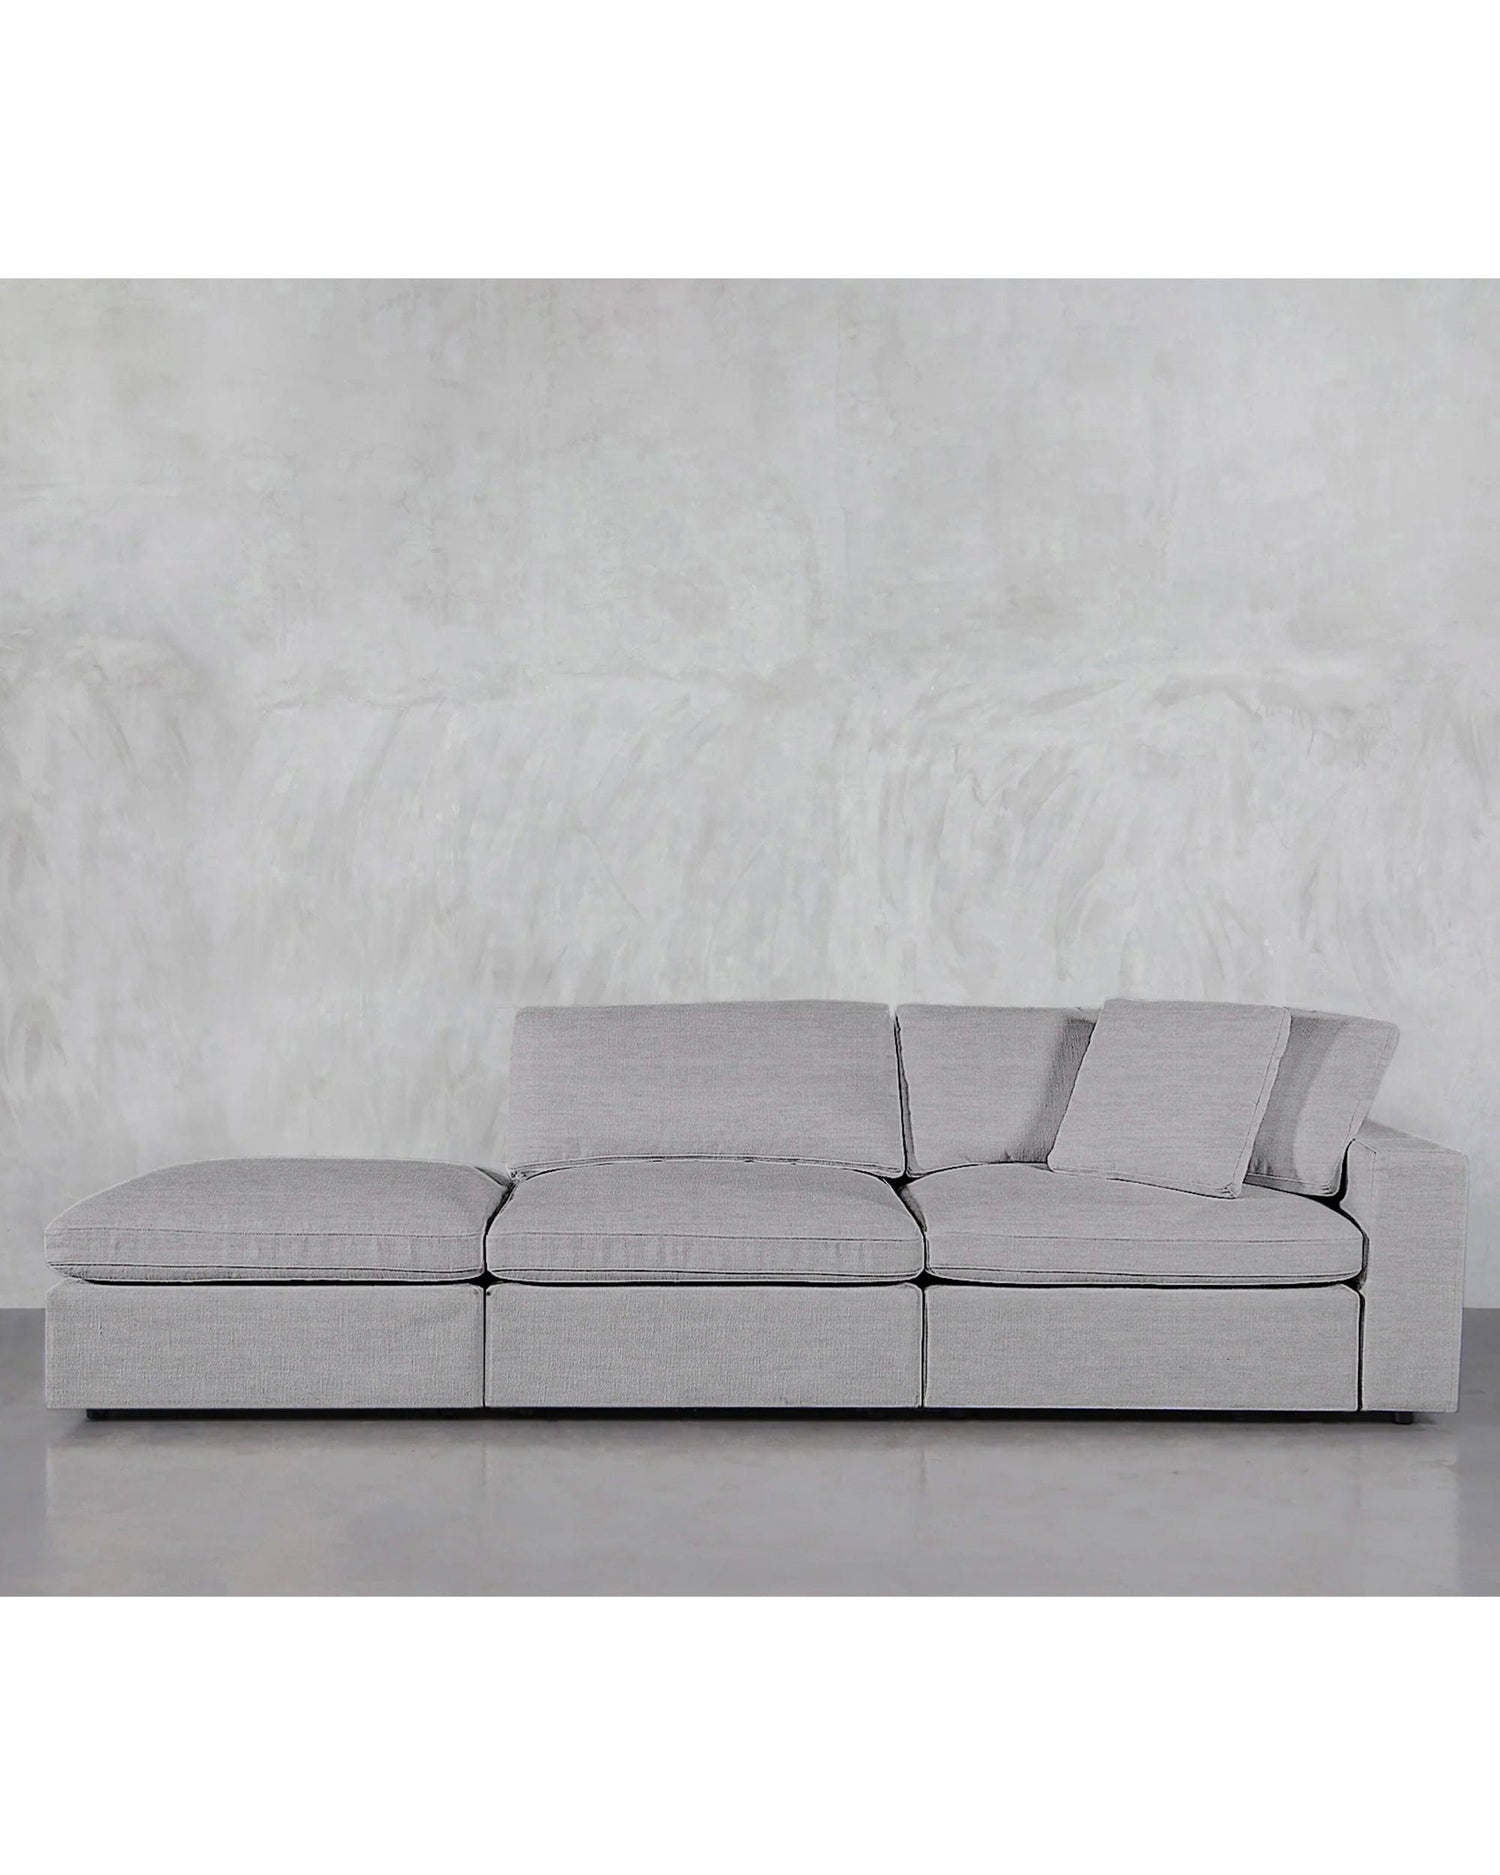 7th Avenue 3-Seat Modular Lounger Sofa